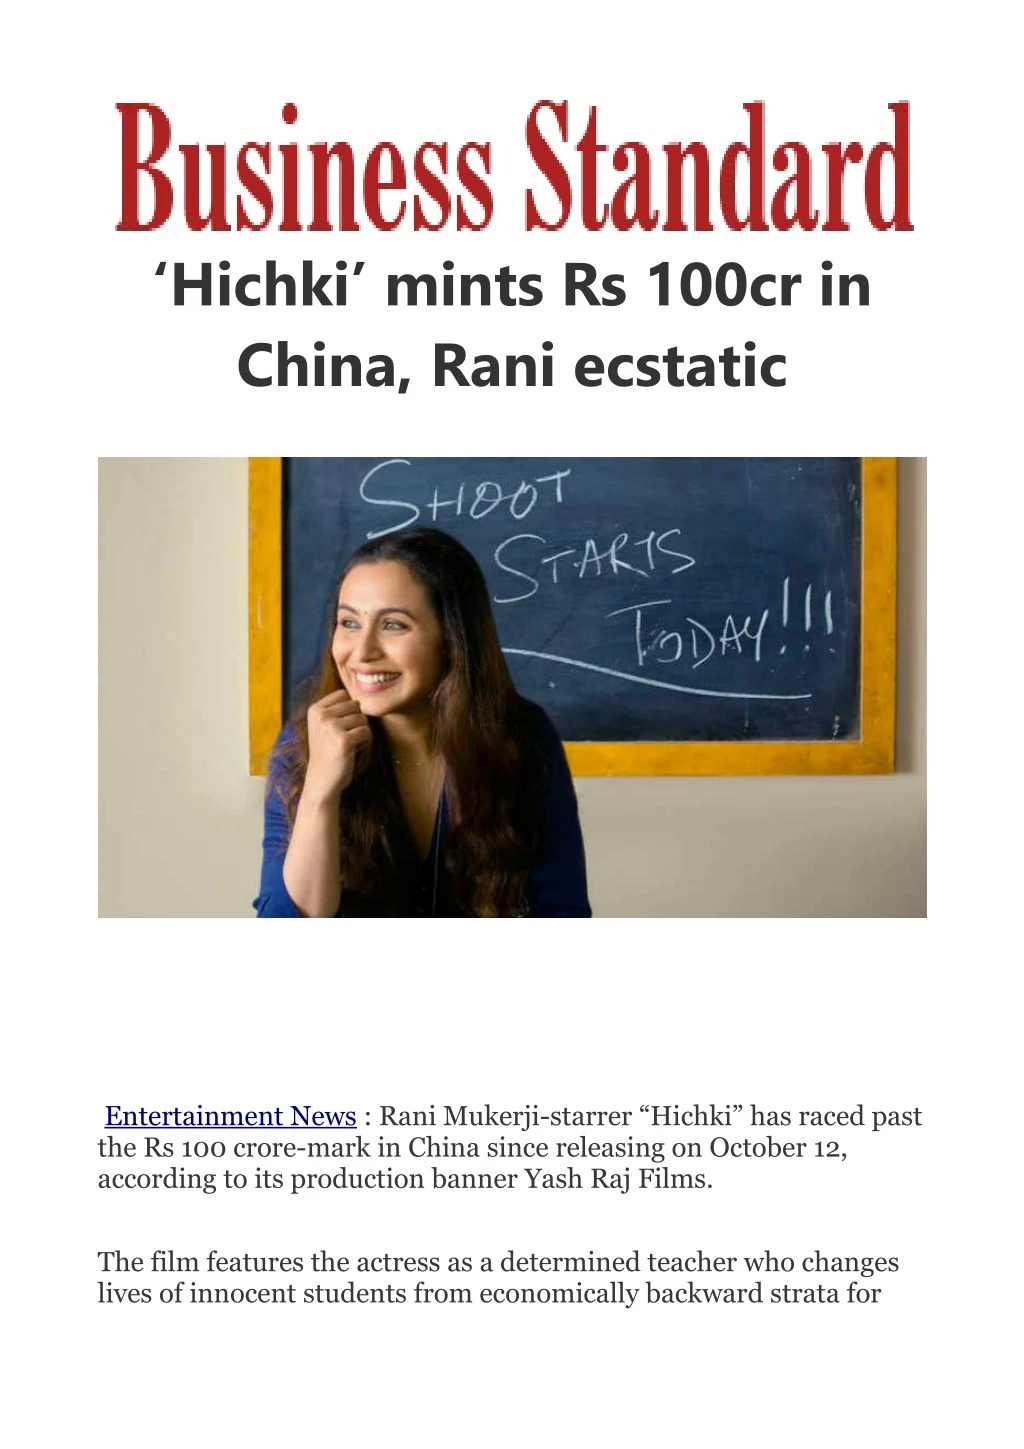 hichki mints rs 100cr in china rani ecstatic